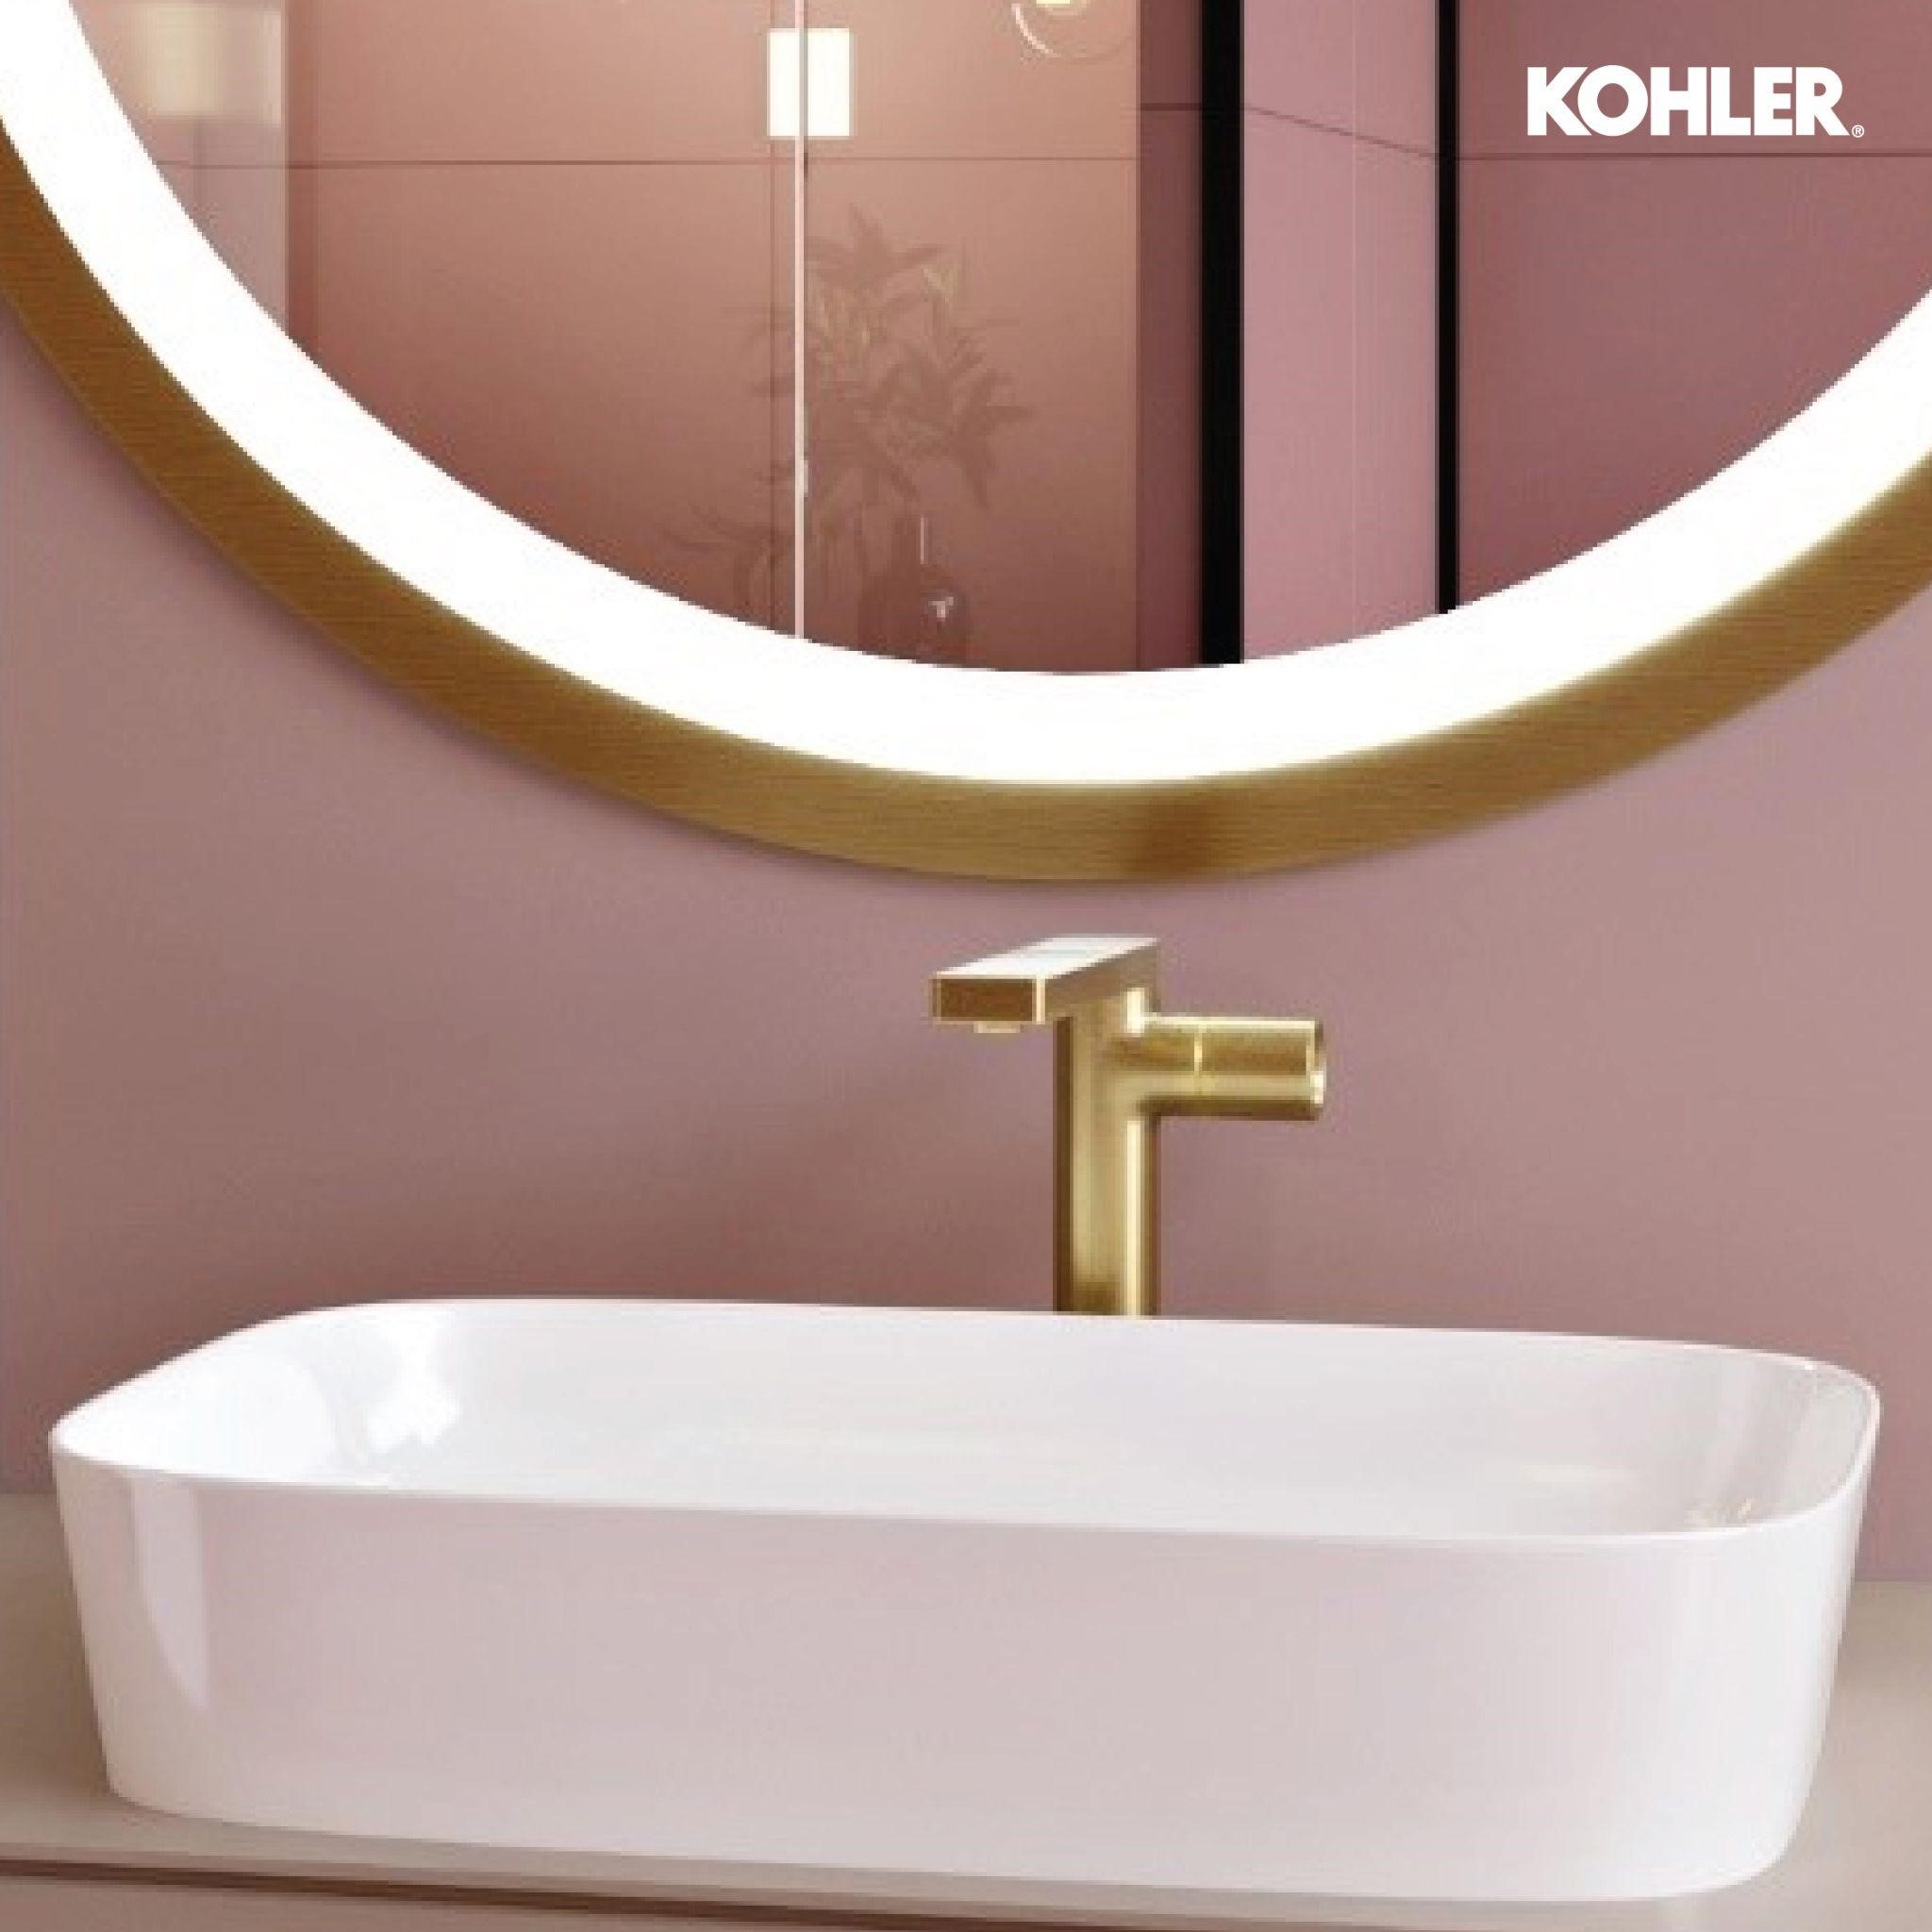 Kohler wash basin